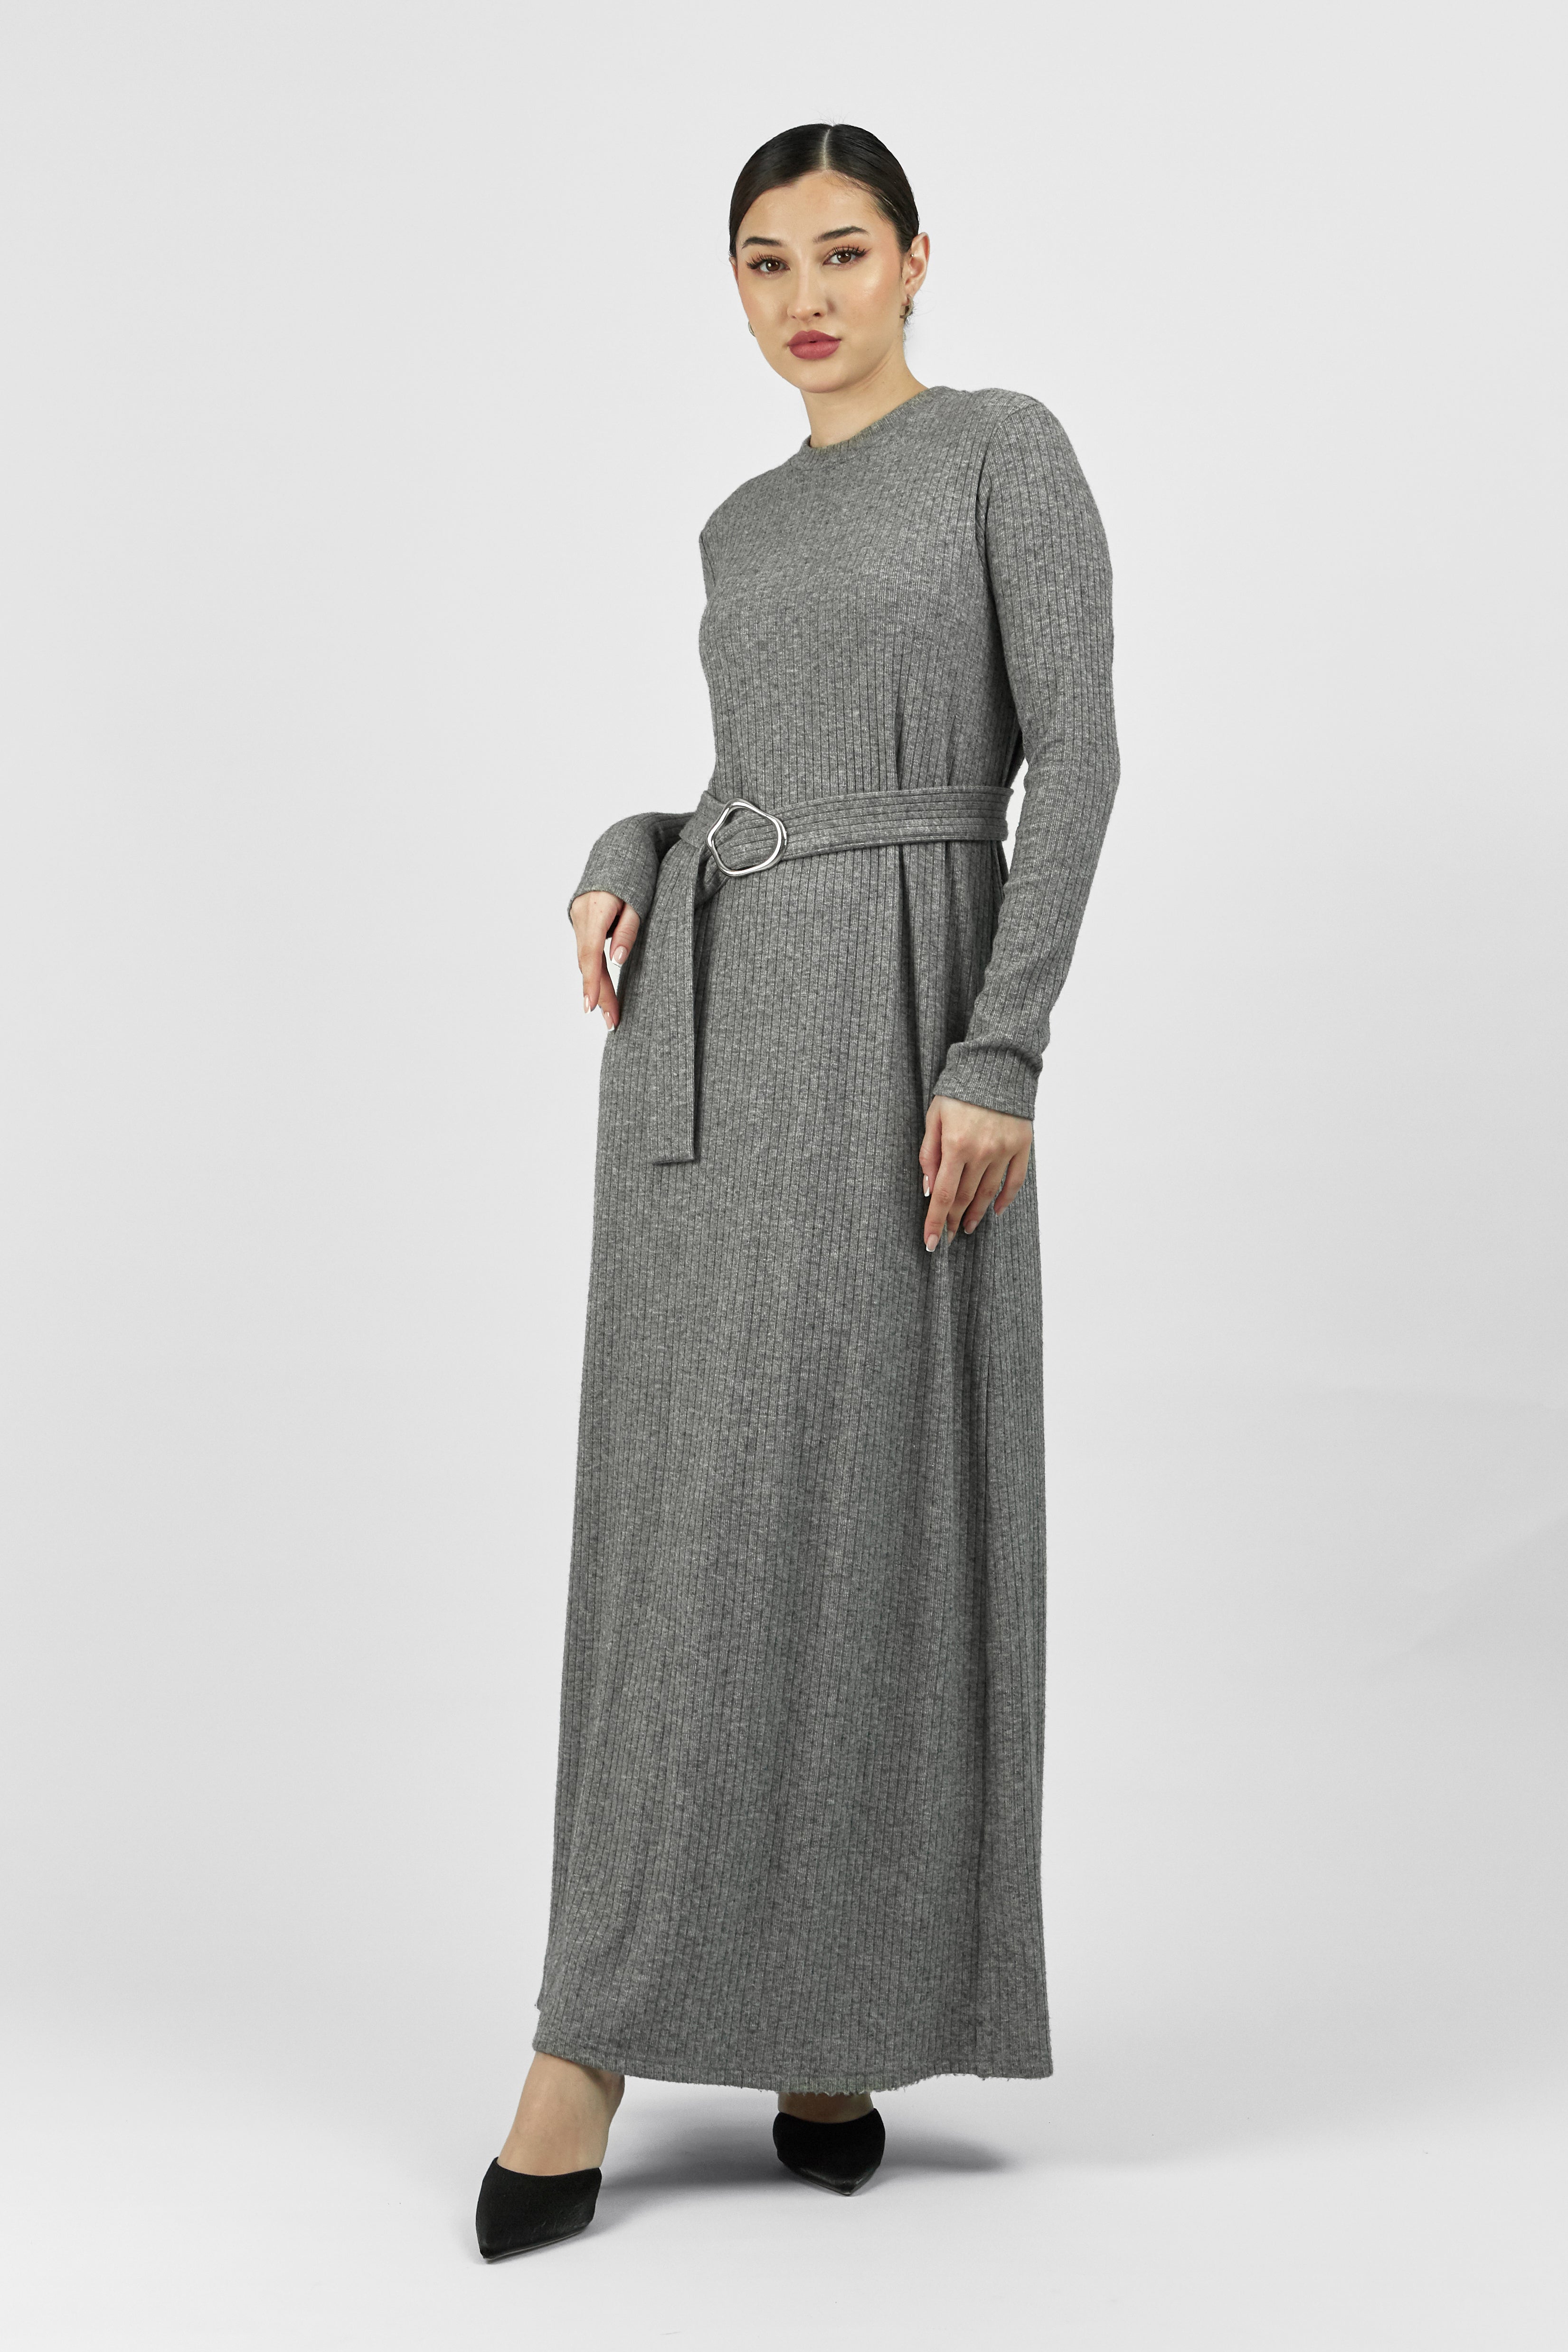 US - Belted Knit Dress - Heather Grey